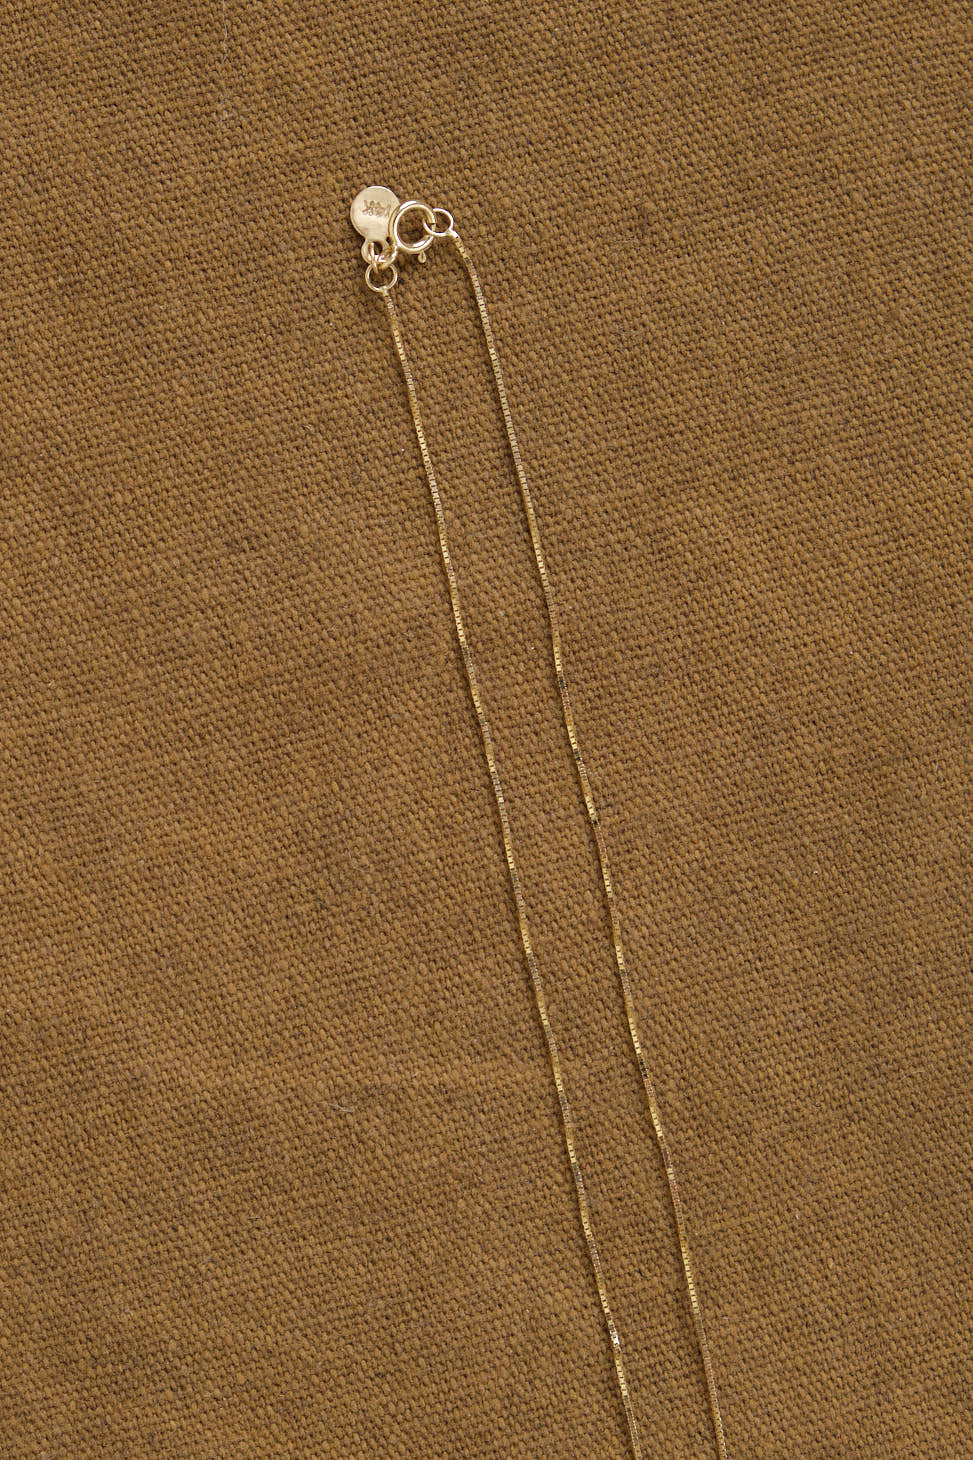 Clasp on Cerclen Necklace in Rhodochrosite